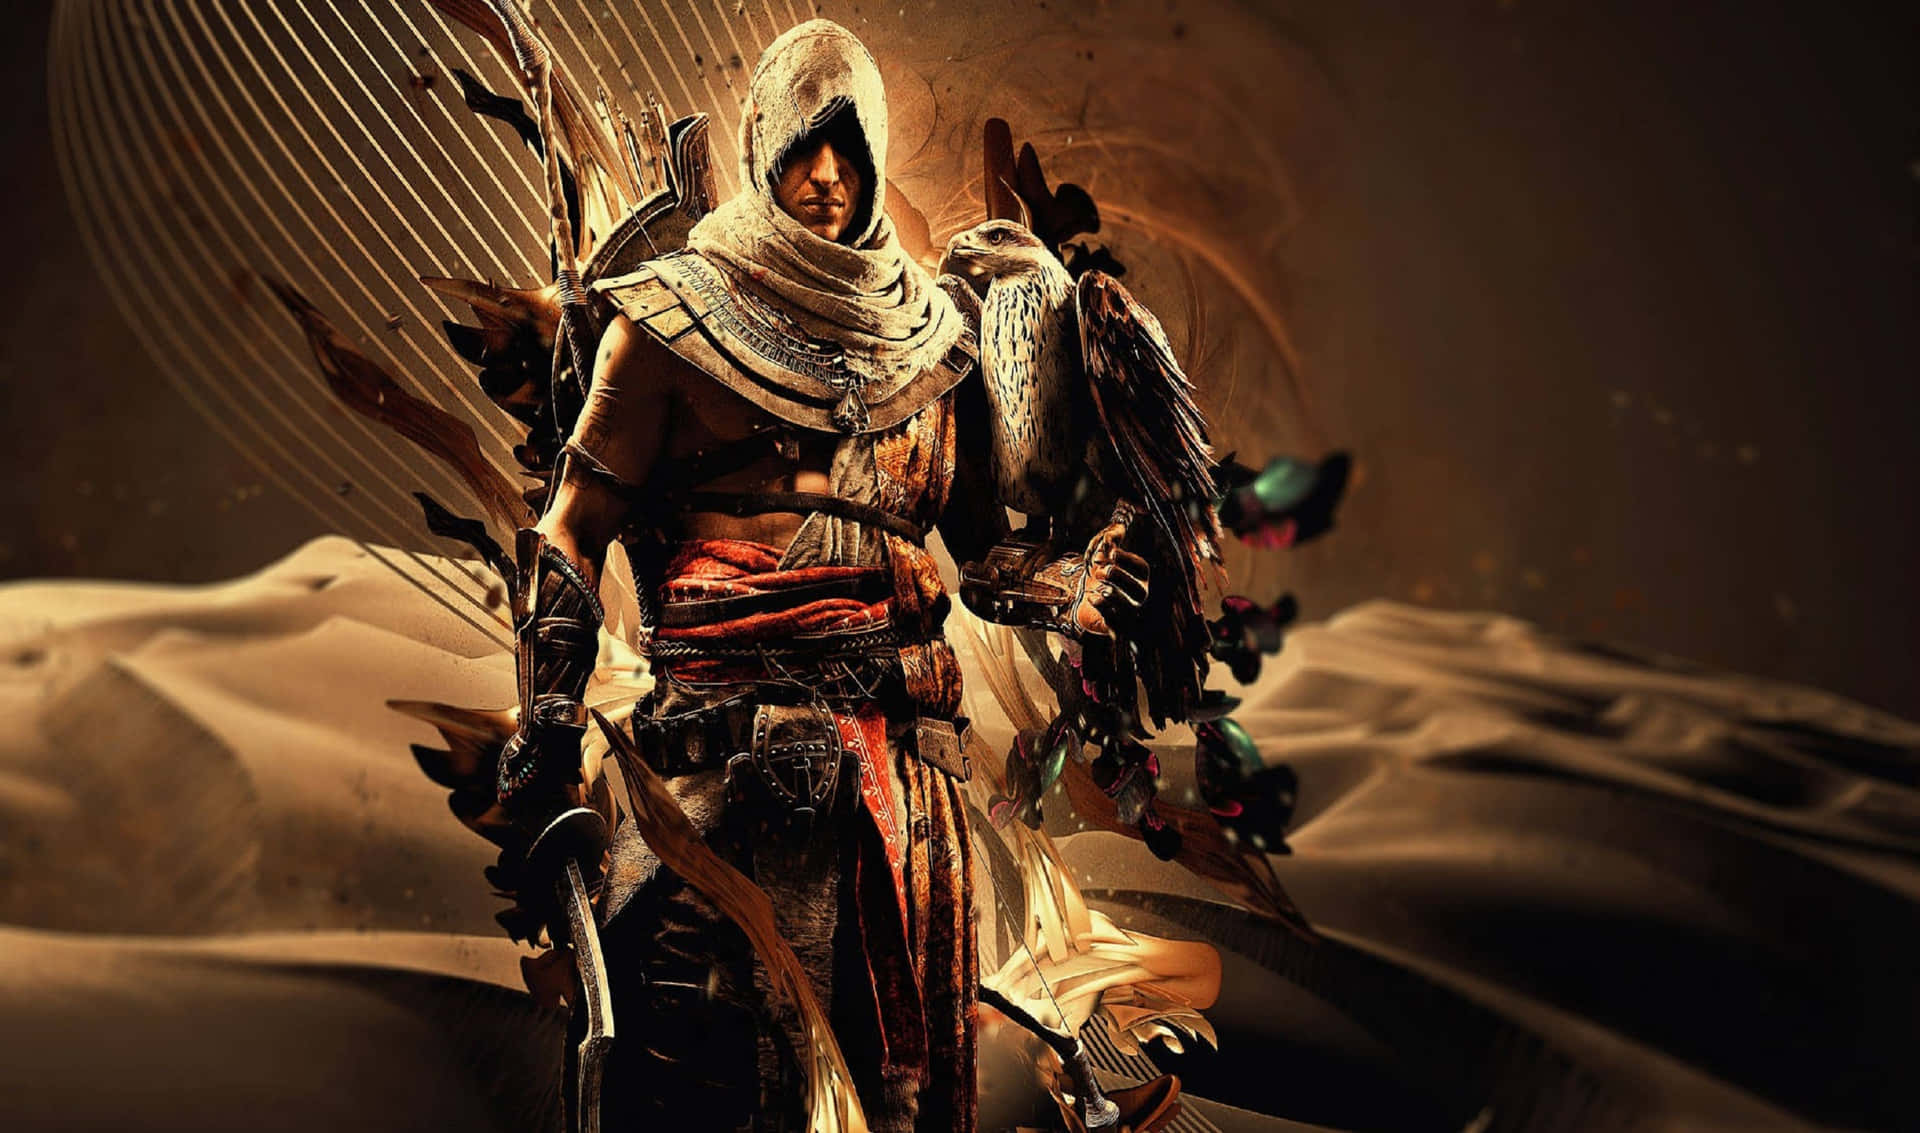 Grafiskkonst Av Assassin's Creed Odyssey Bakgrund På 2440x1440.